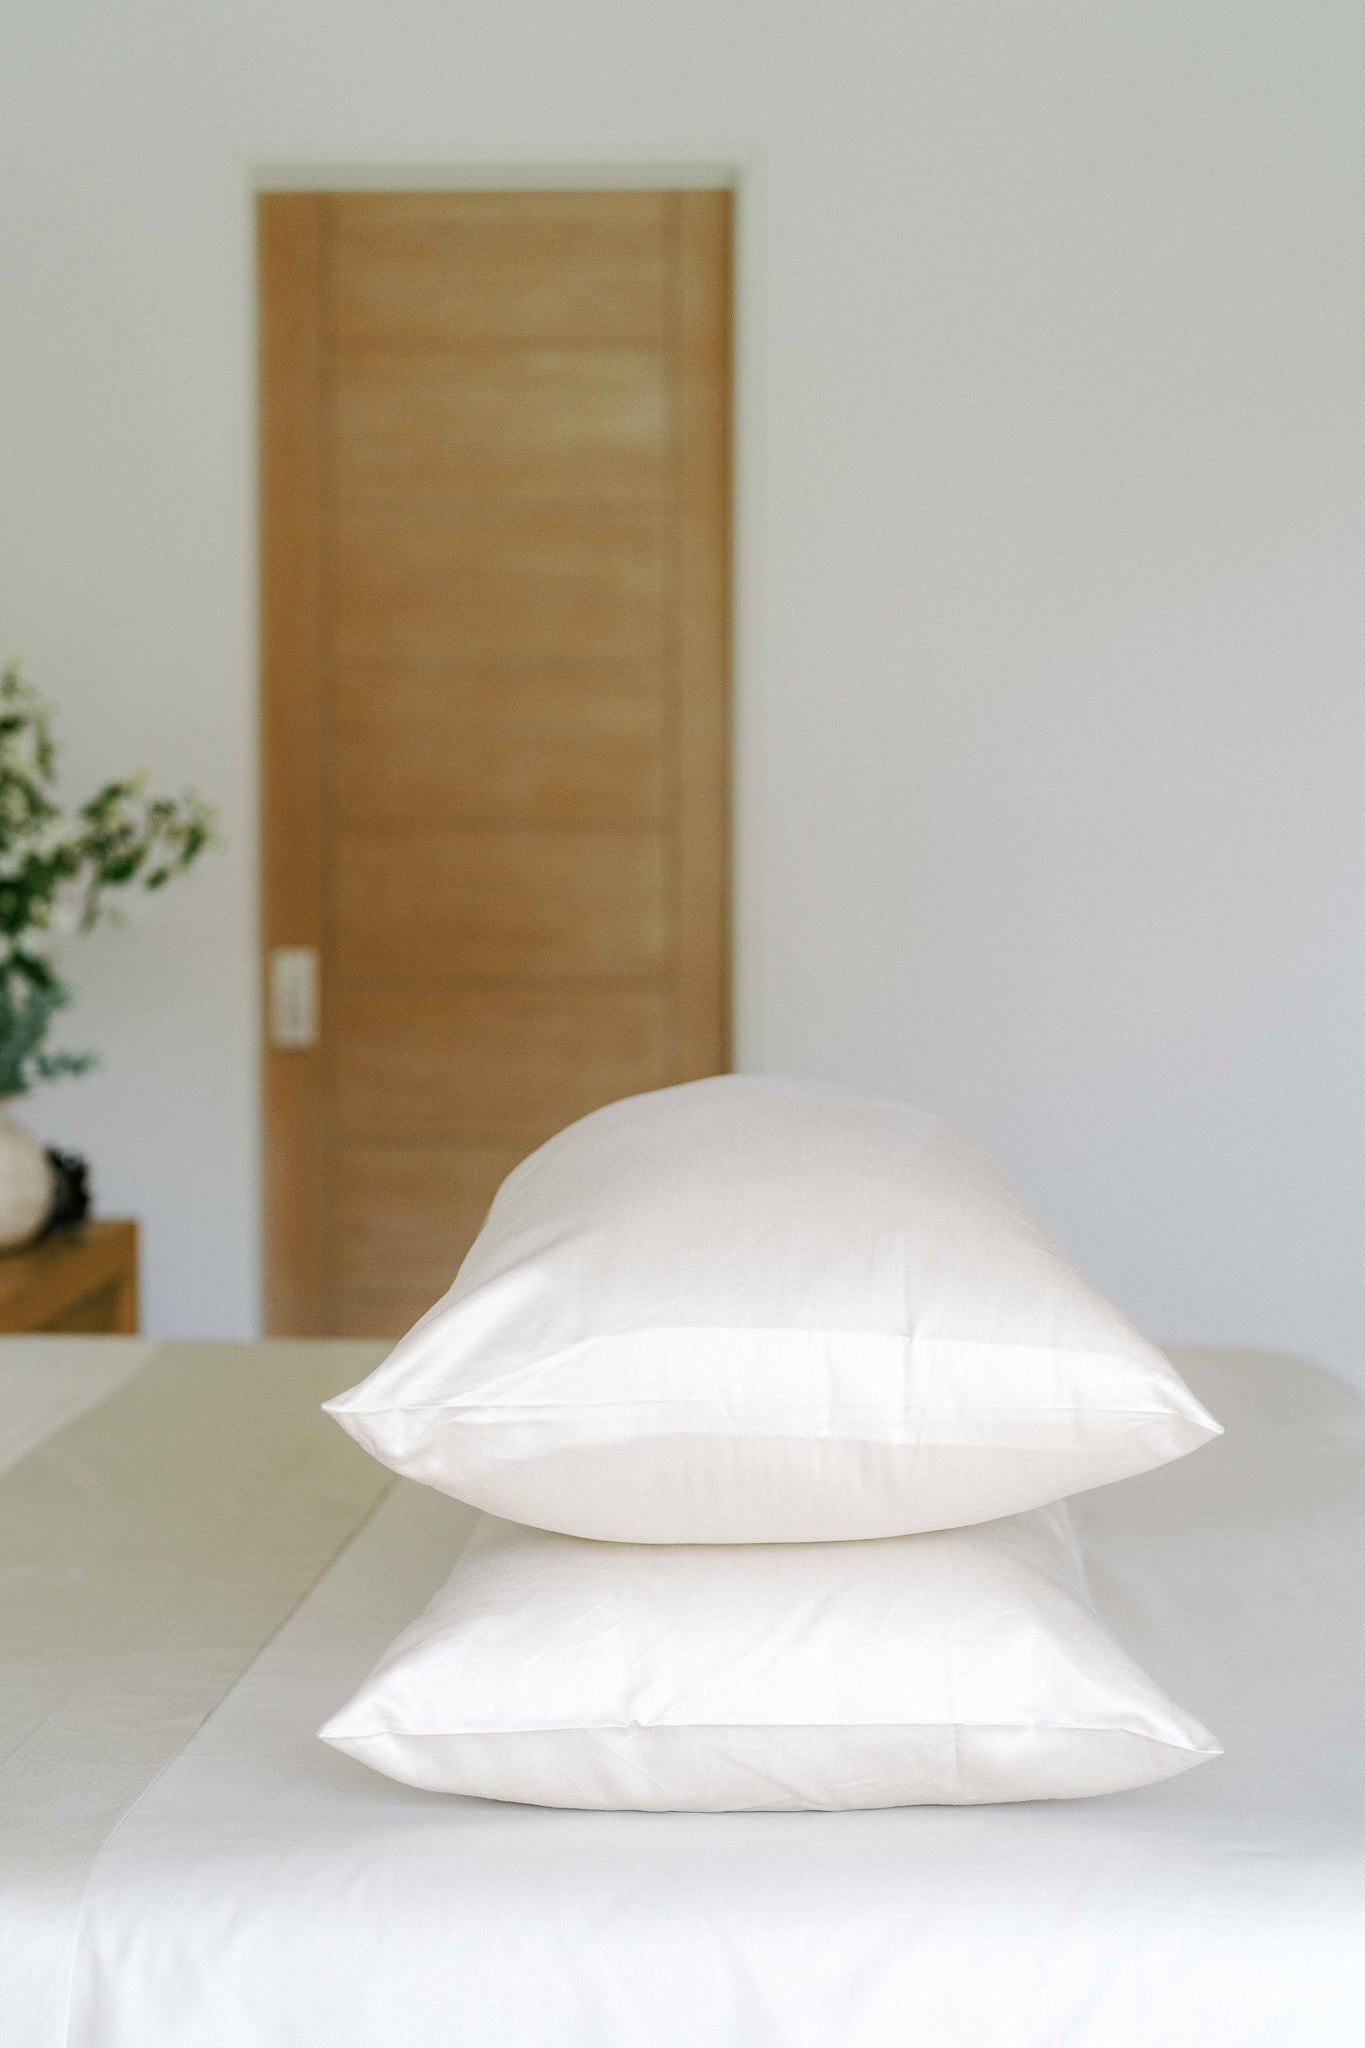 Minimalist bedroom decor featuring pristine white bedding